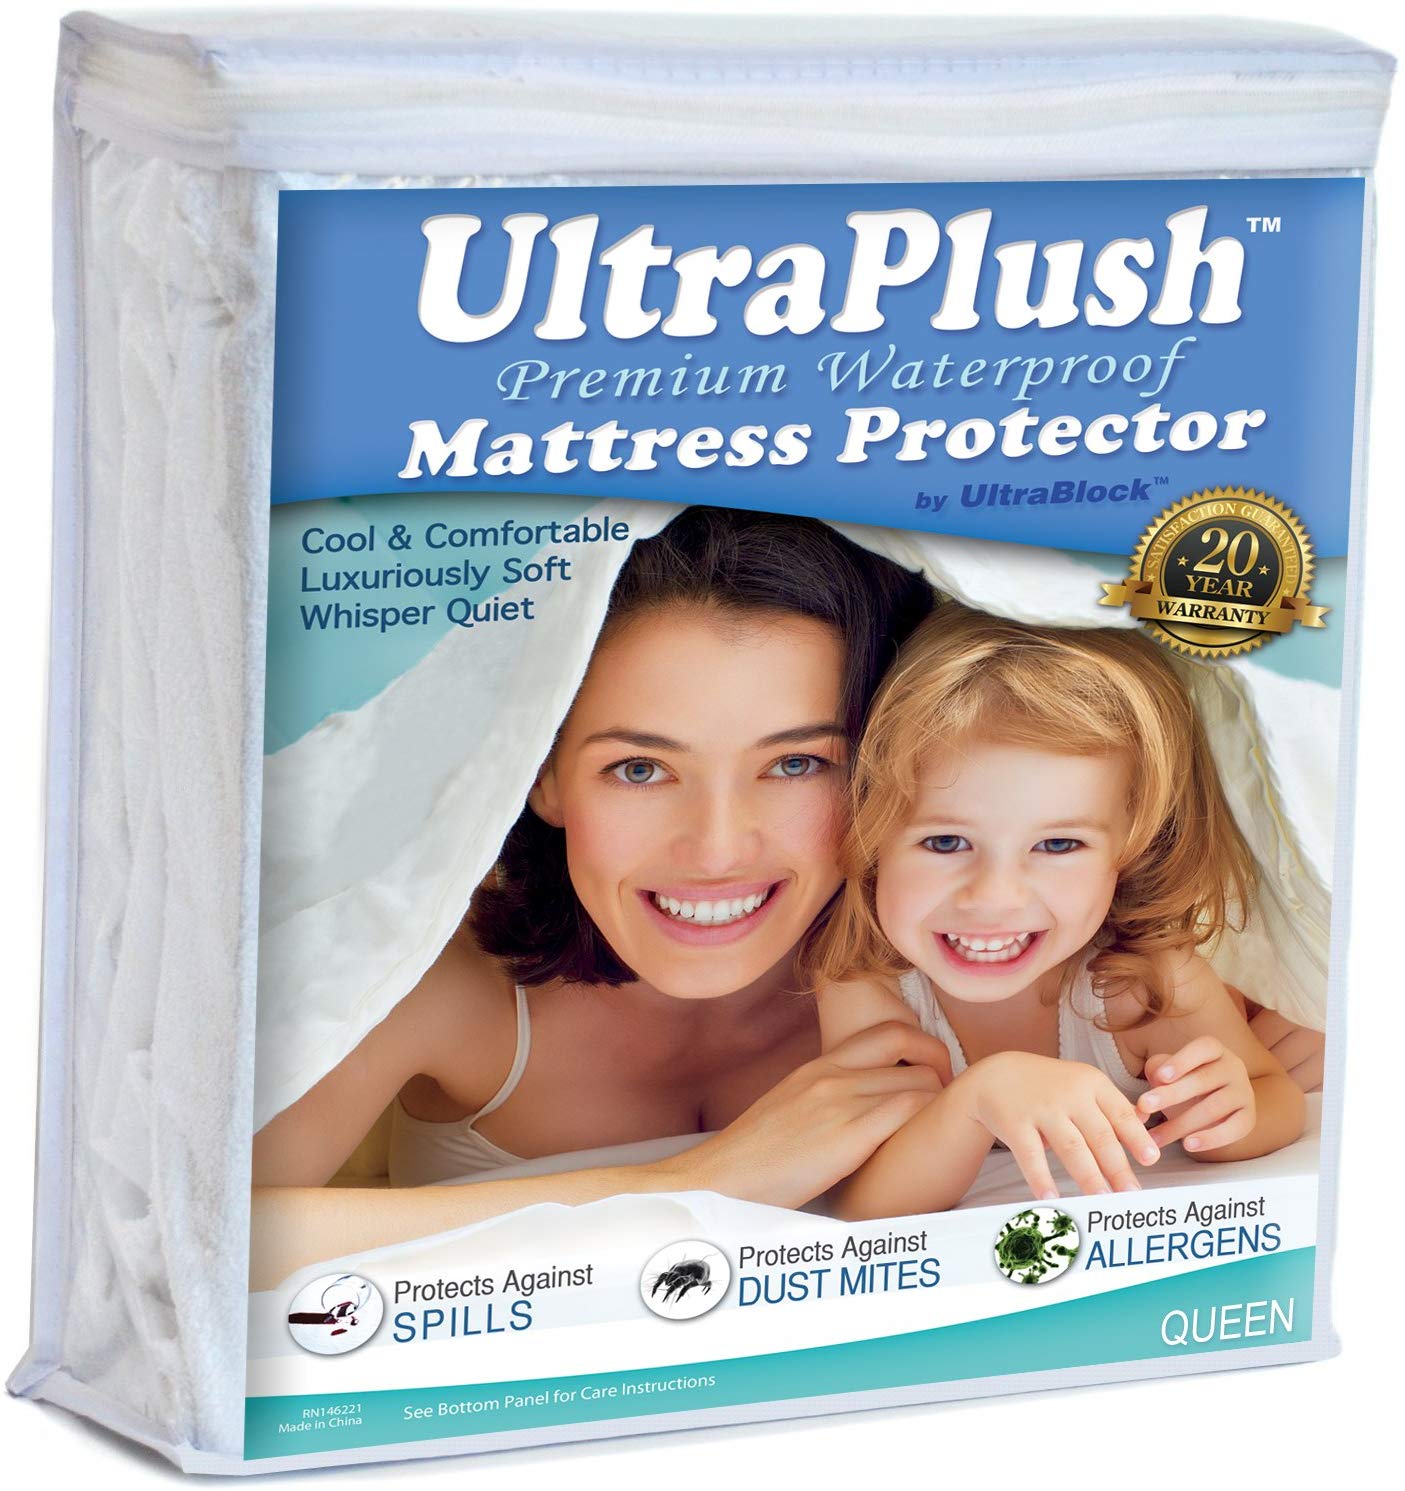 UltraPlush Premium Waterproof Mattress Protector